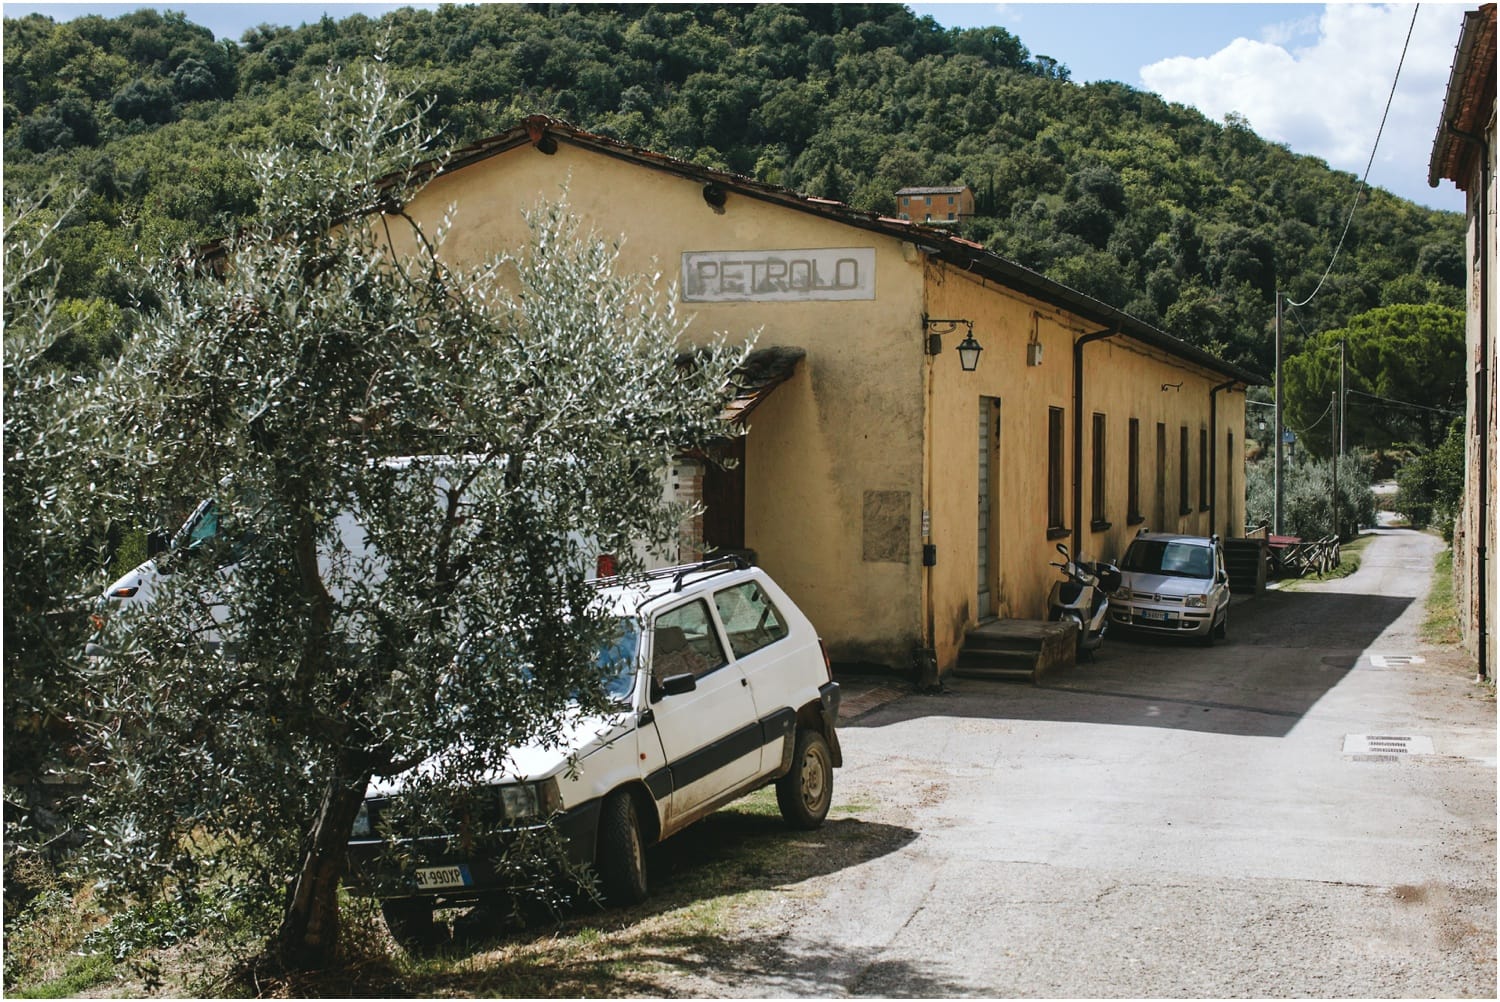 villa petrolo wedding Tuscany